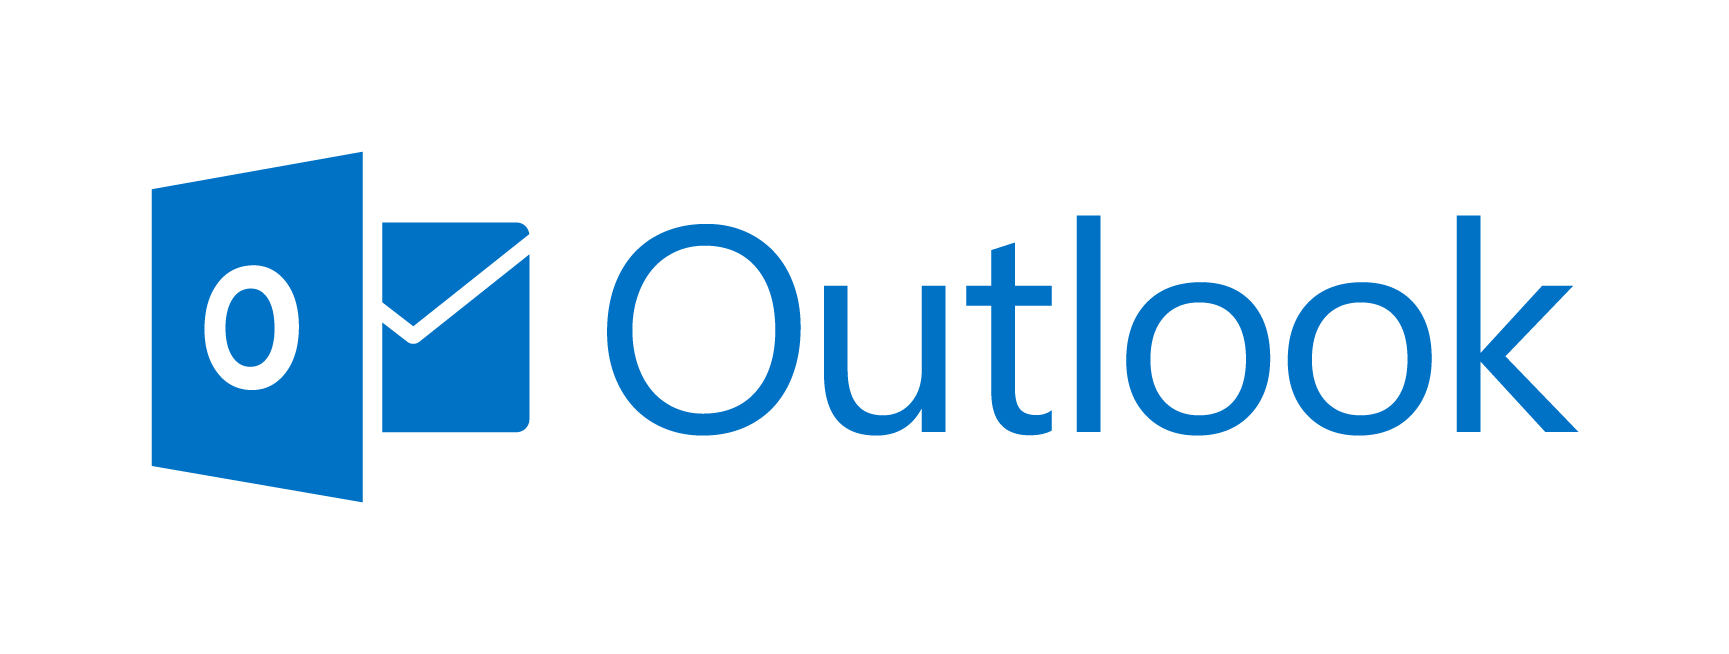 Значок Outlook. Microsoft Outlook. Outlook логотип. Майкрософт Outlook.